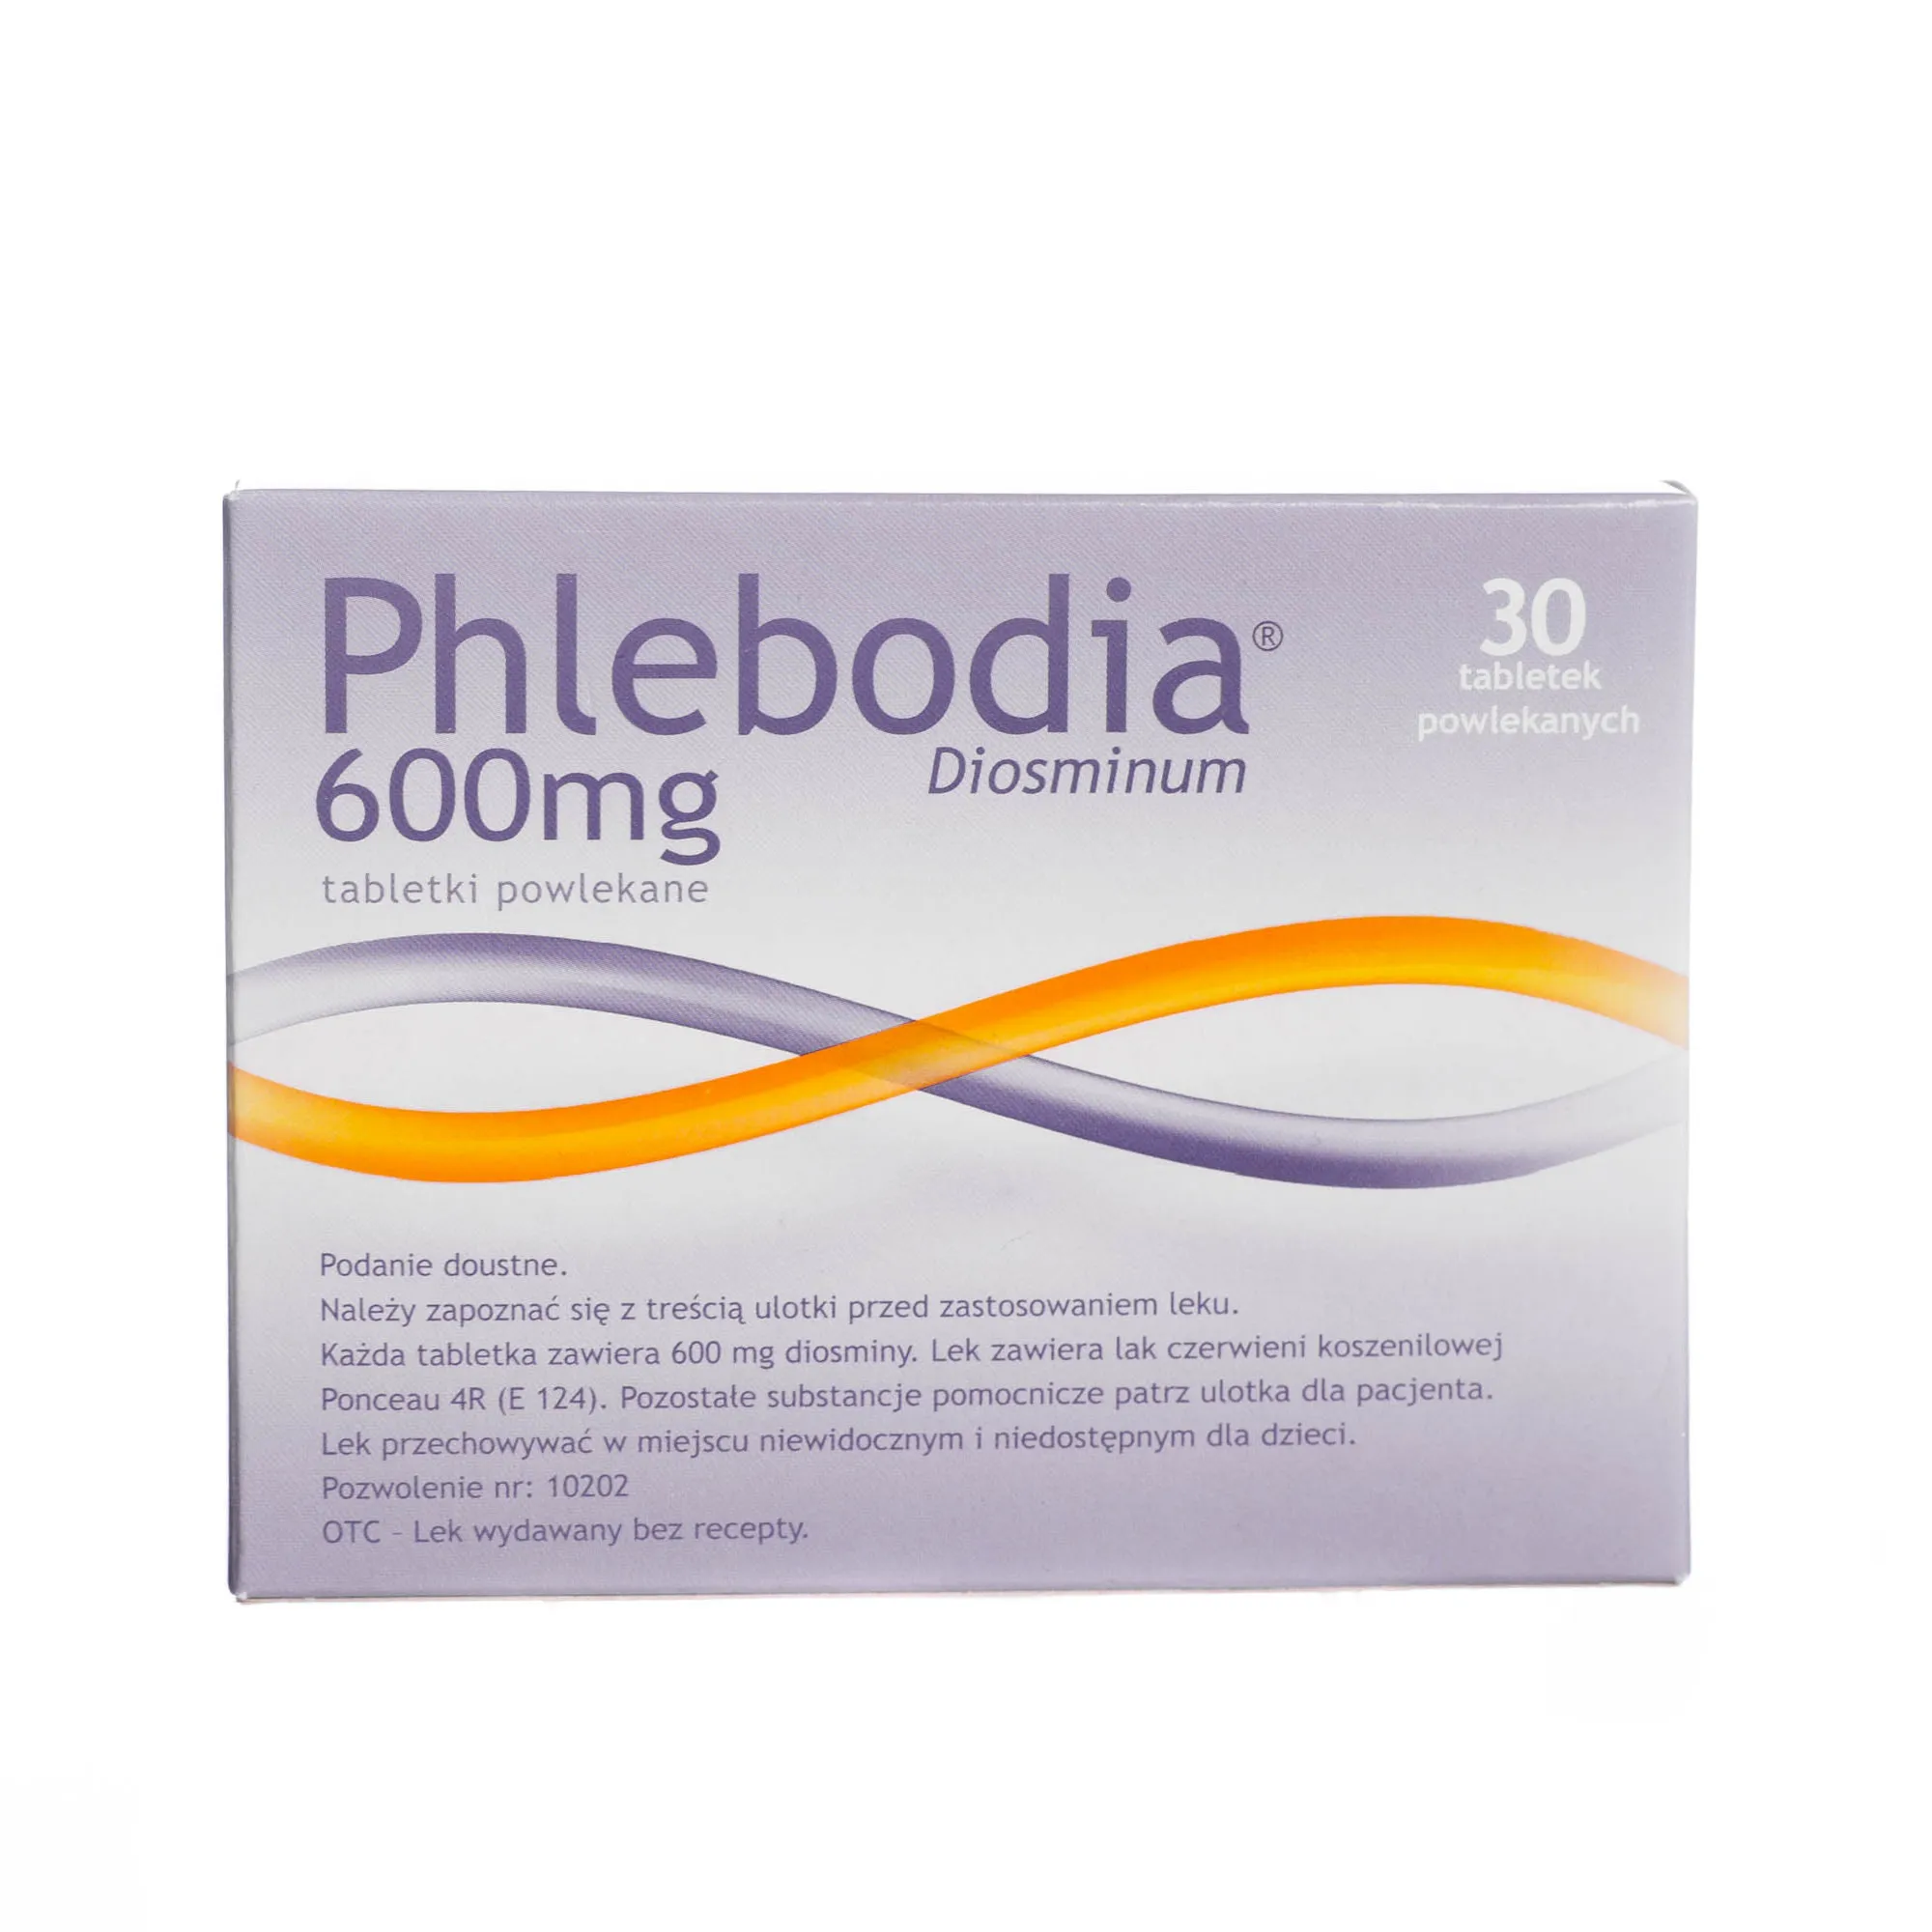 Phlebodia Diosminum, 600mg, 30 tabletek powlekanych 